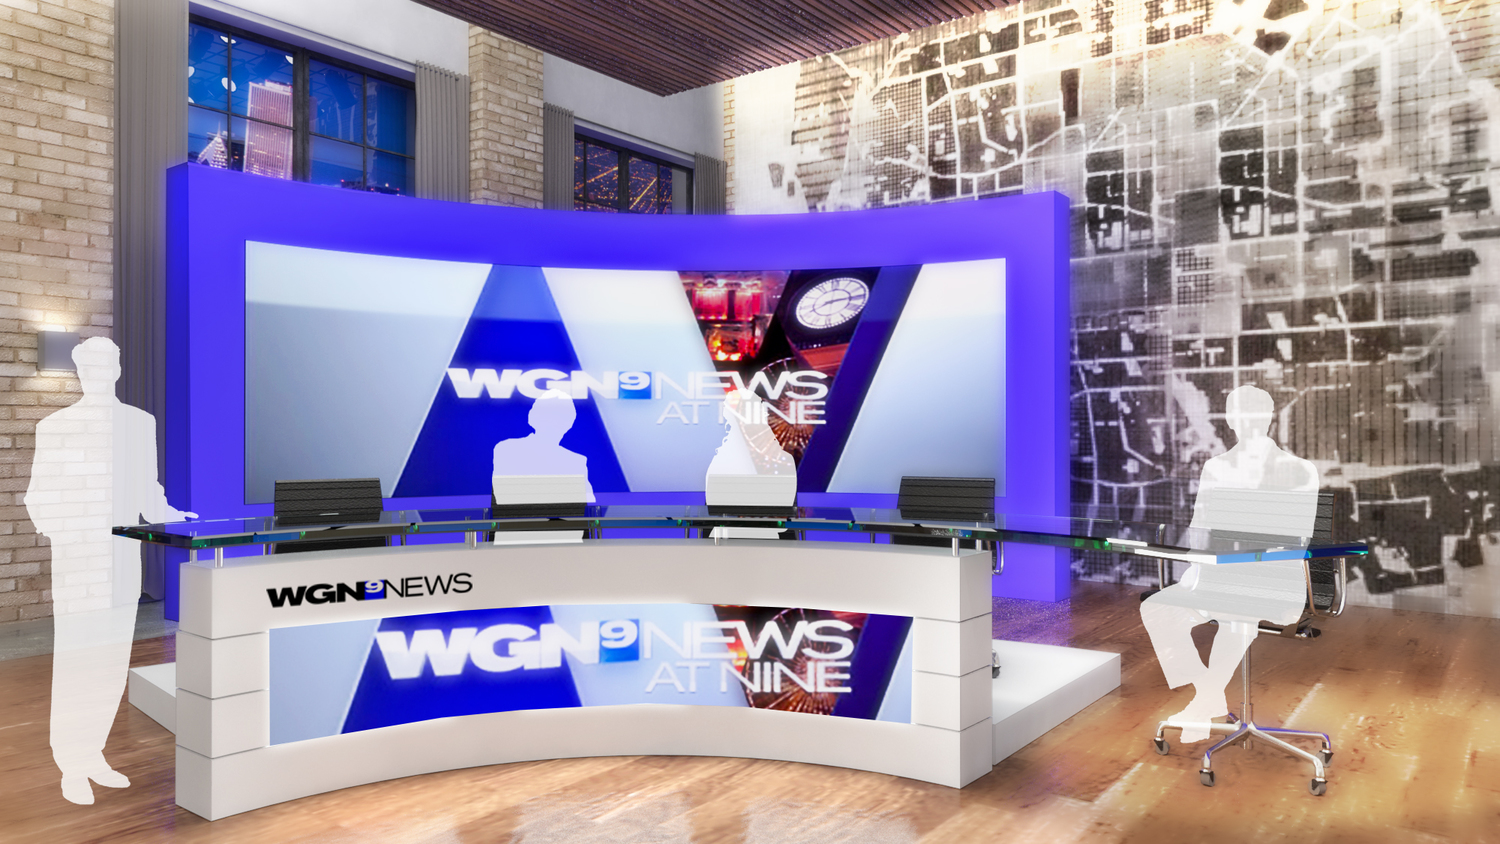 WGN-TV9-Newscast-Broadcast-Studio-Design-03.jpg?format=1500w